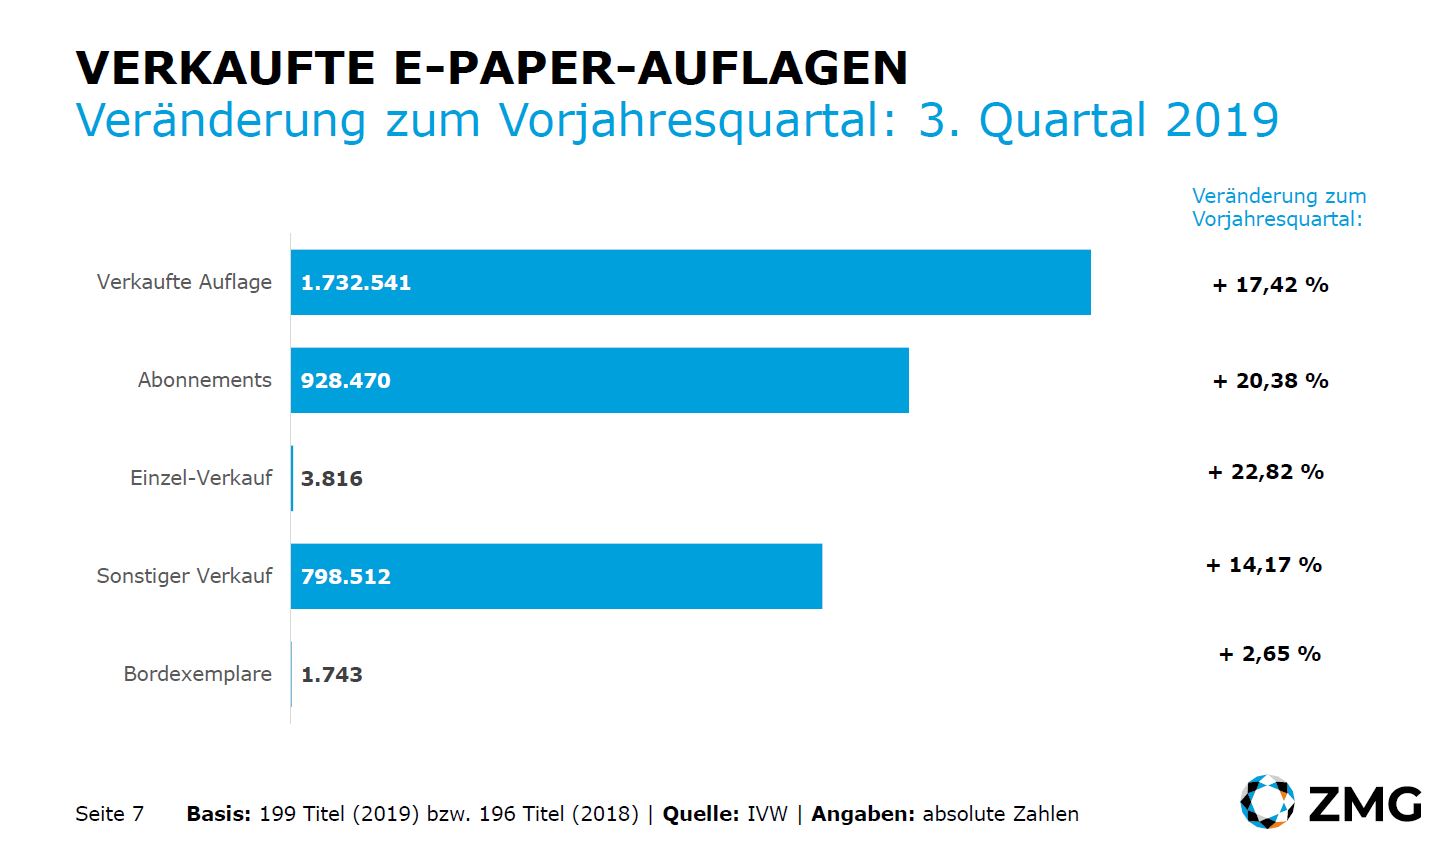 E-Paper-Auflage steigt um gut 17 Prozent